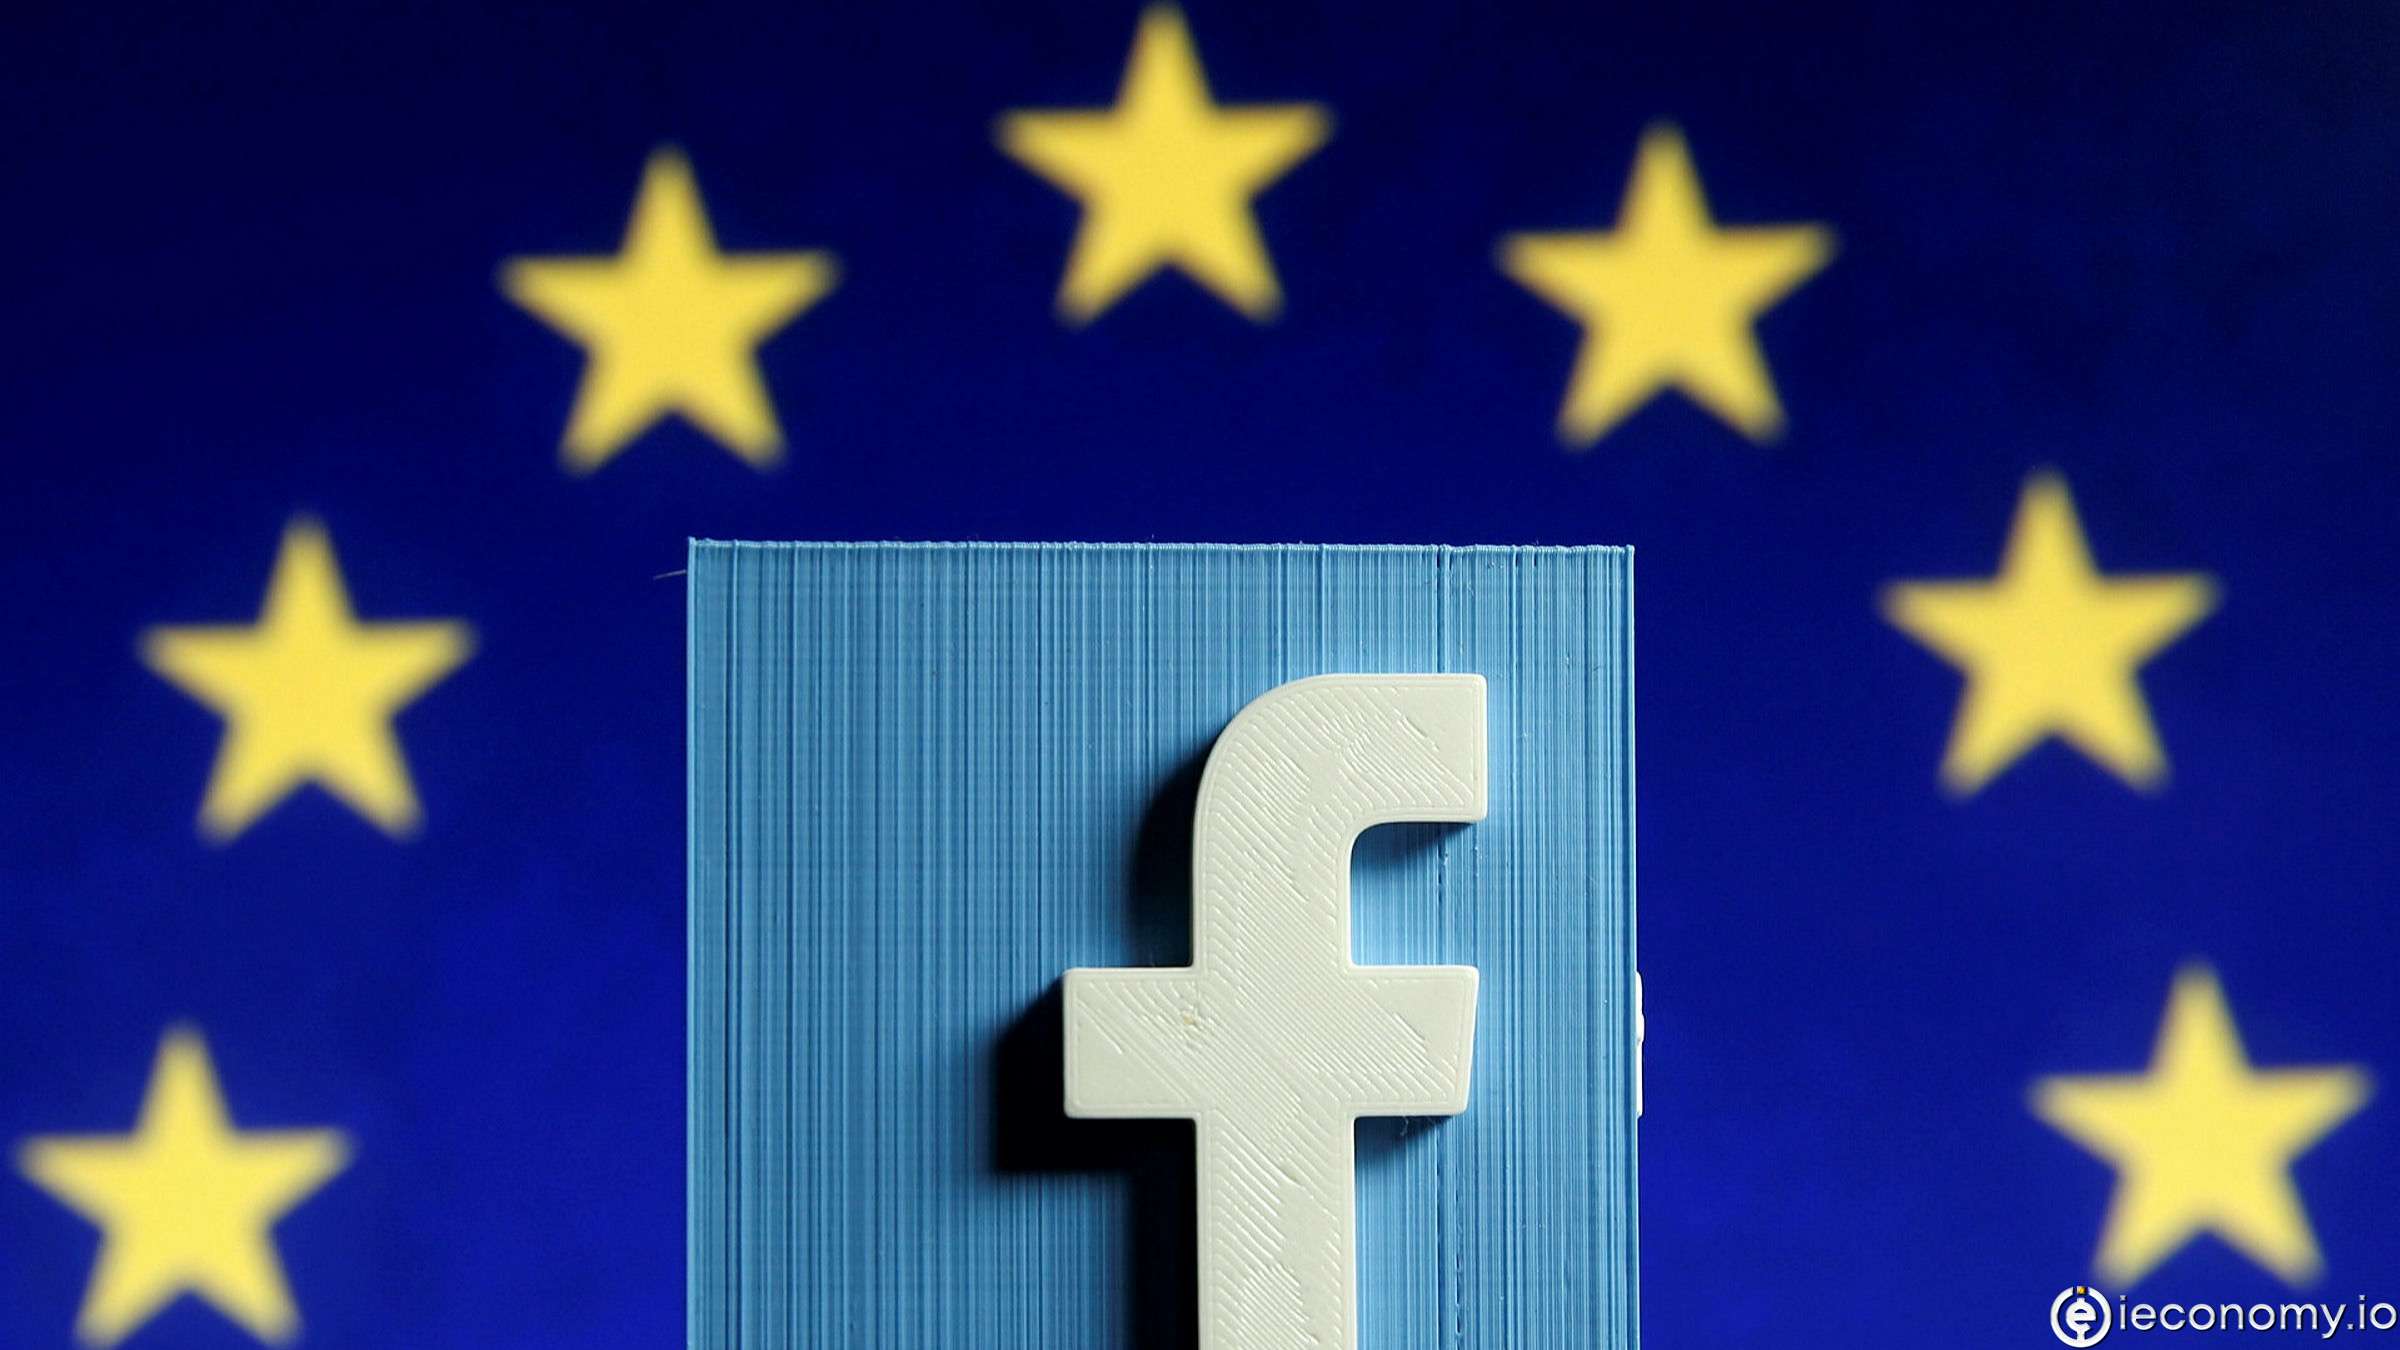 The EU antitrust authority has started investigations against Facebook